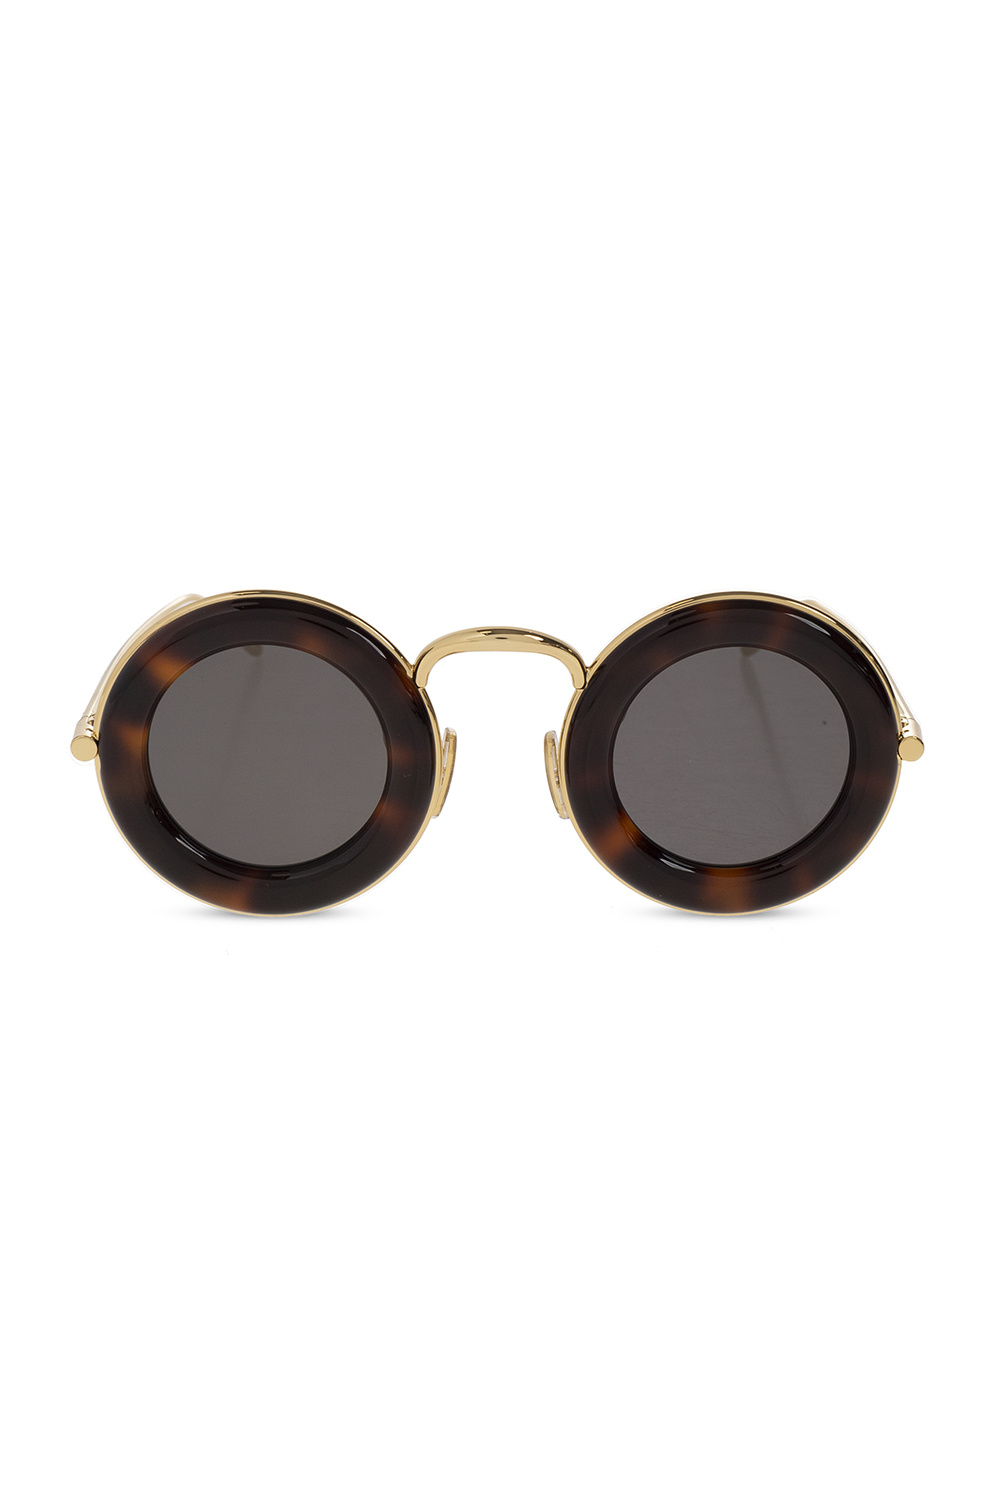 Loewe celine eyewear s156 square sunglasses